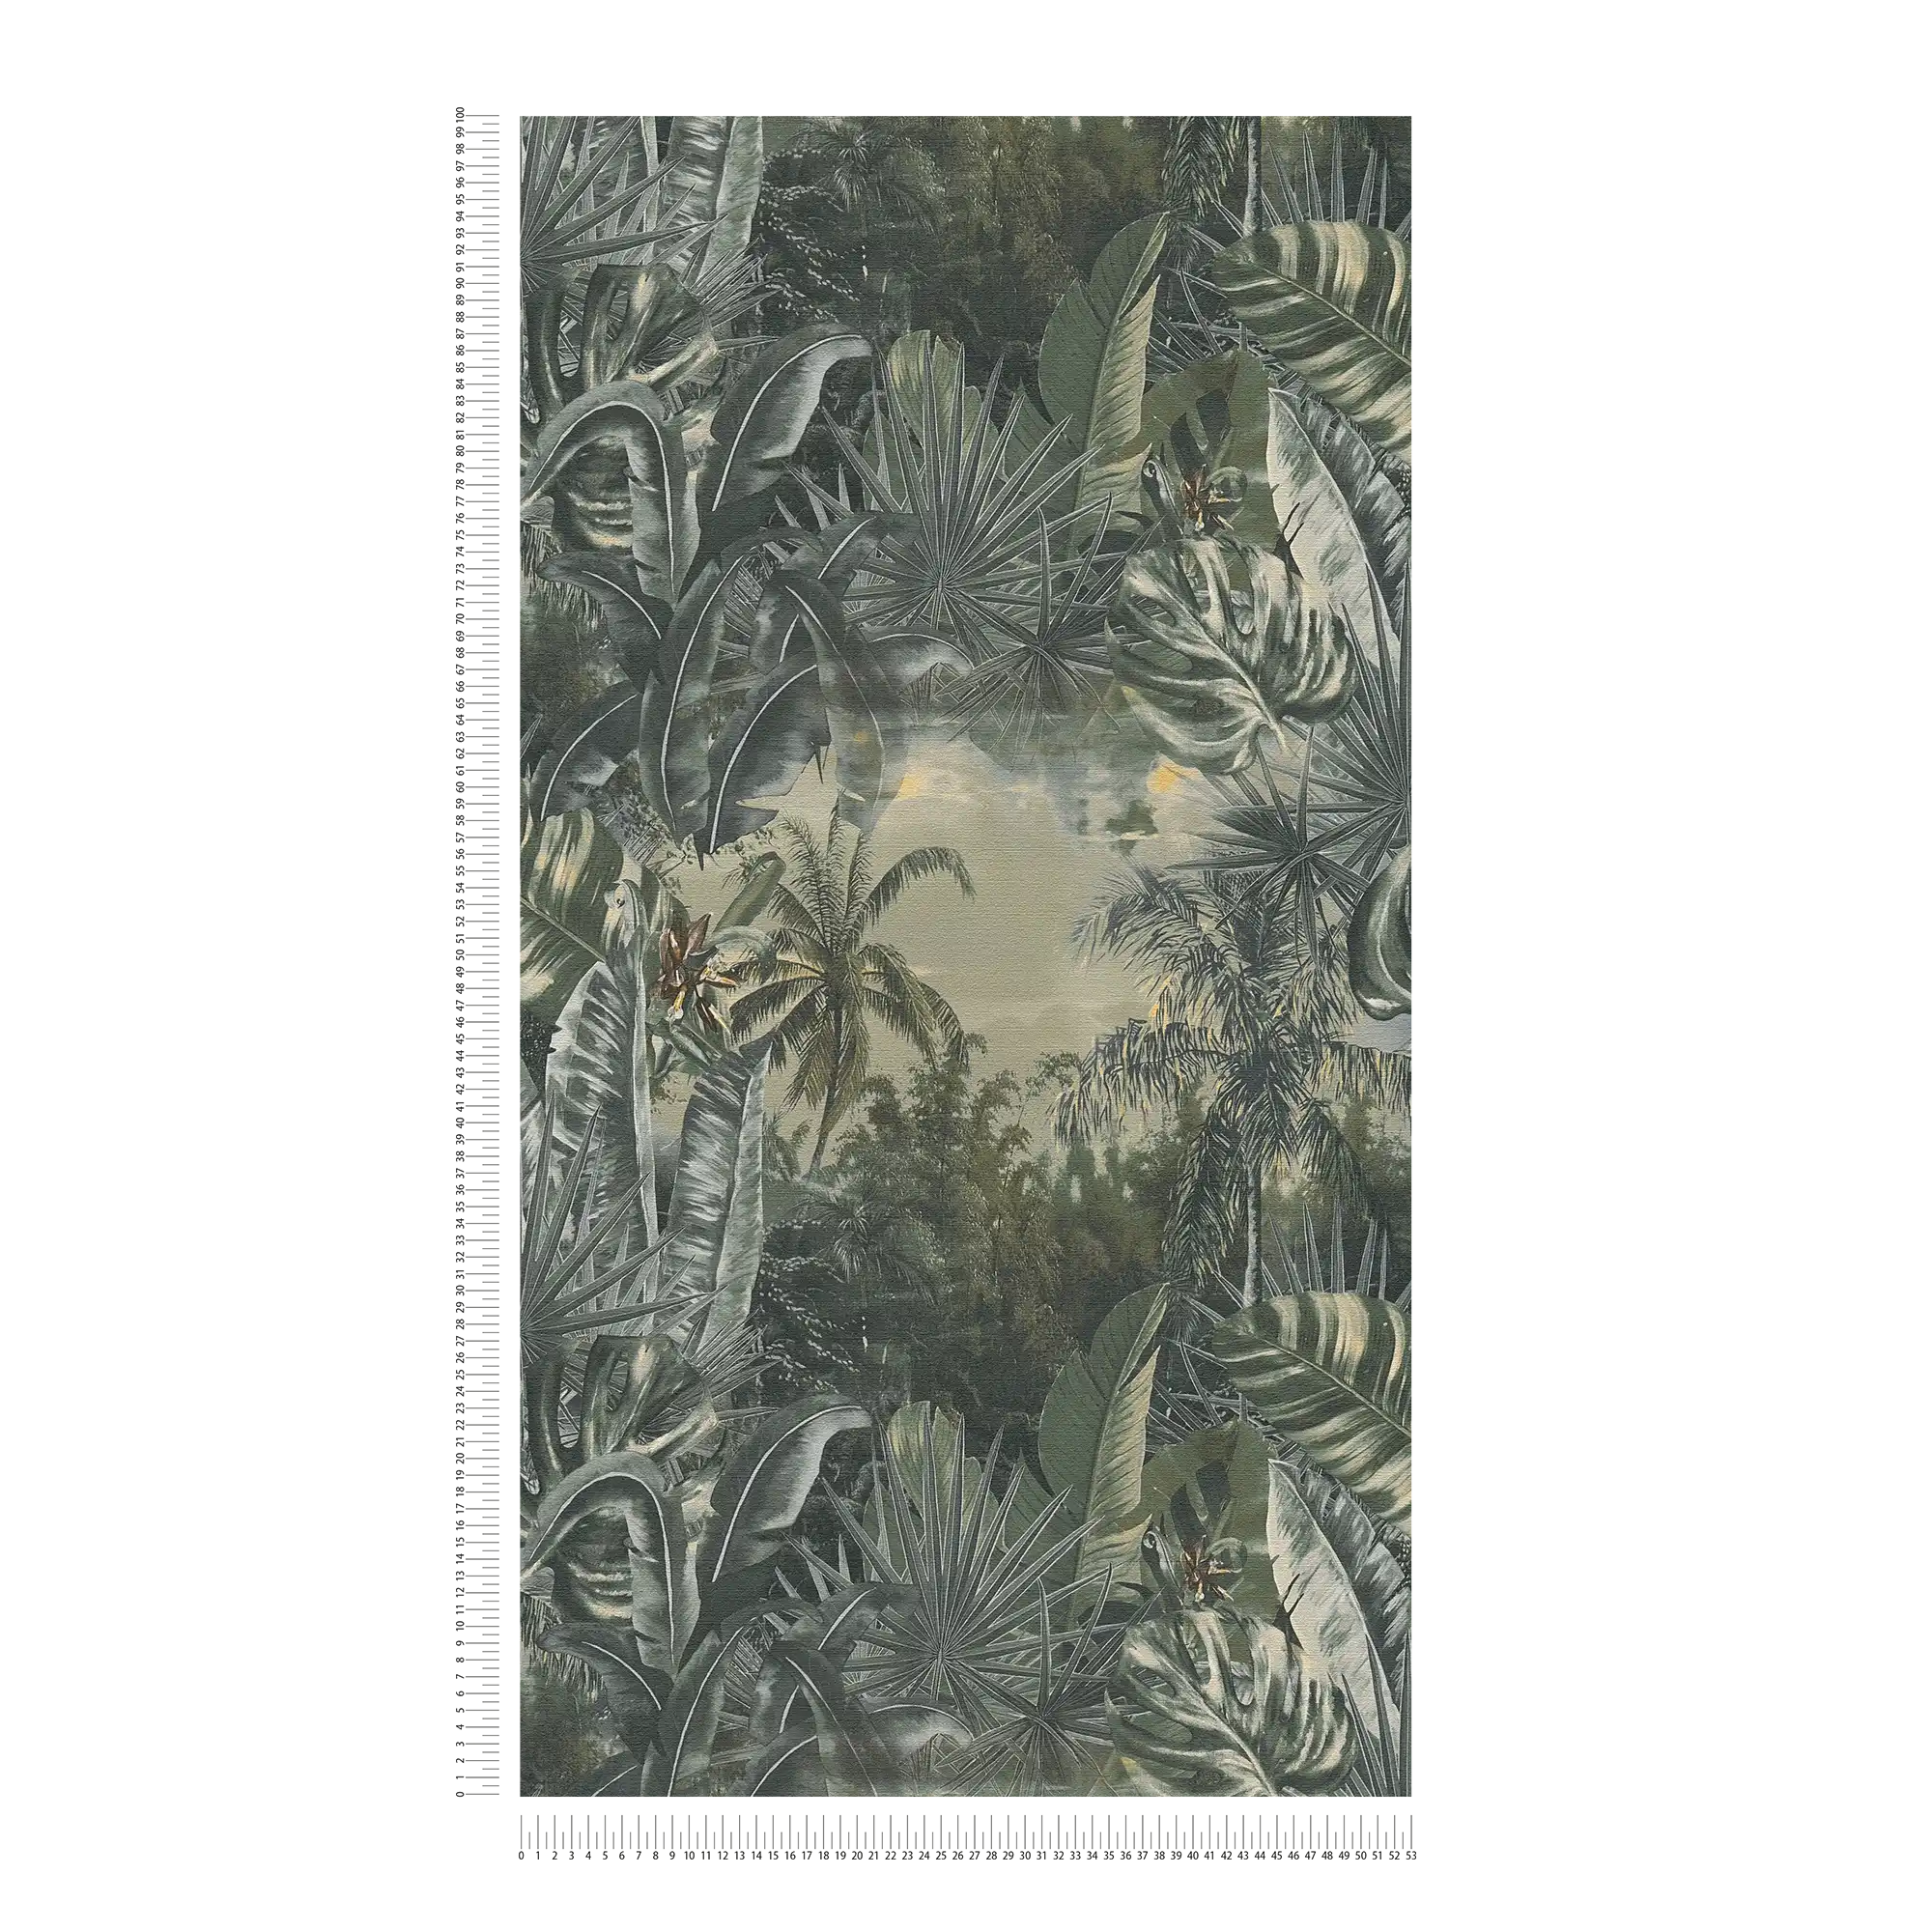             Palm wallpaper jungle pattern, modern colonial style - green
        